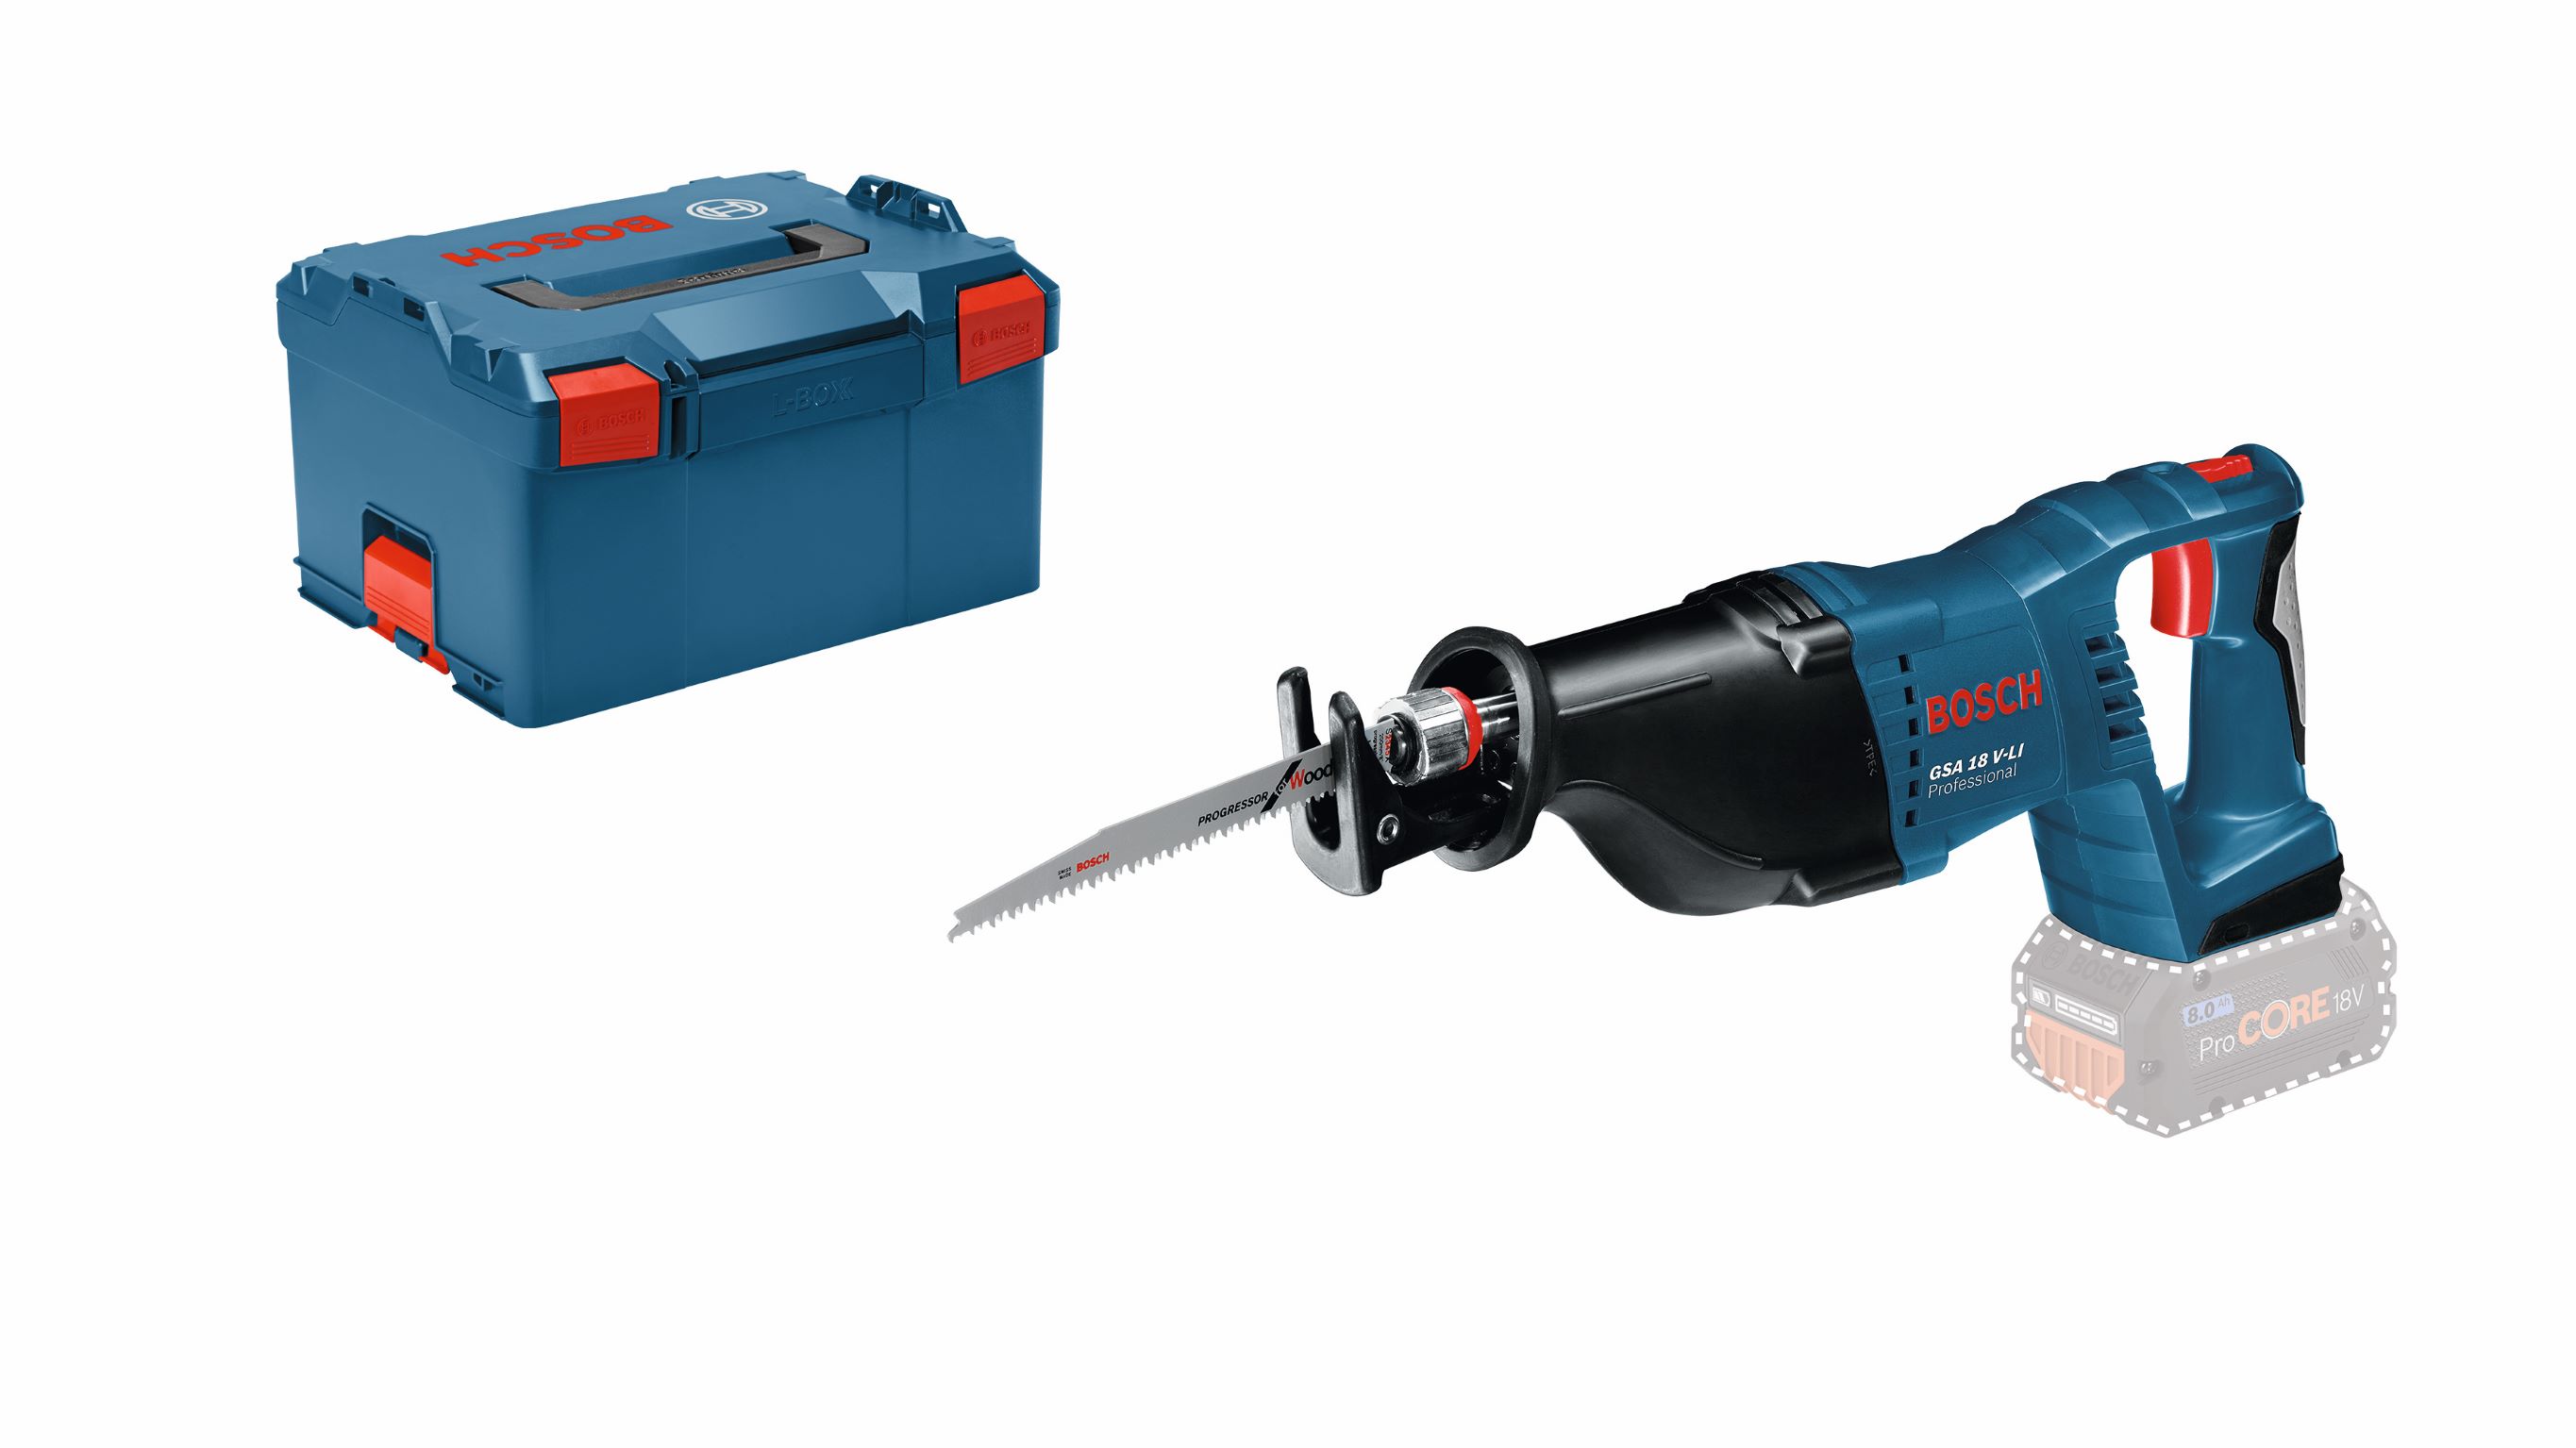 GSA 18 V-LI Cordless Reciprocating Saw in L-Boxx Bosch - 2